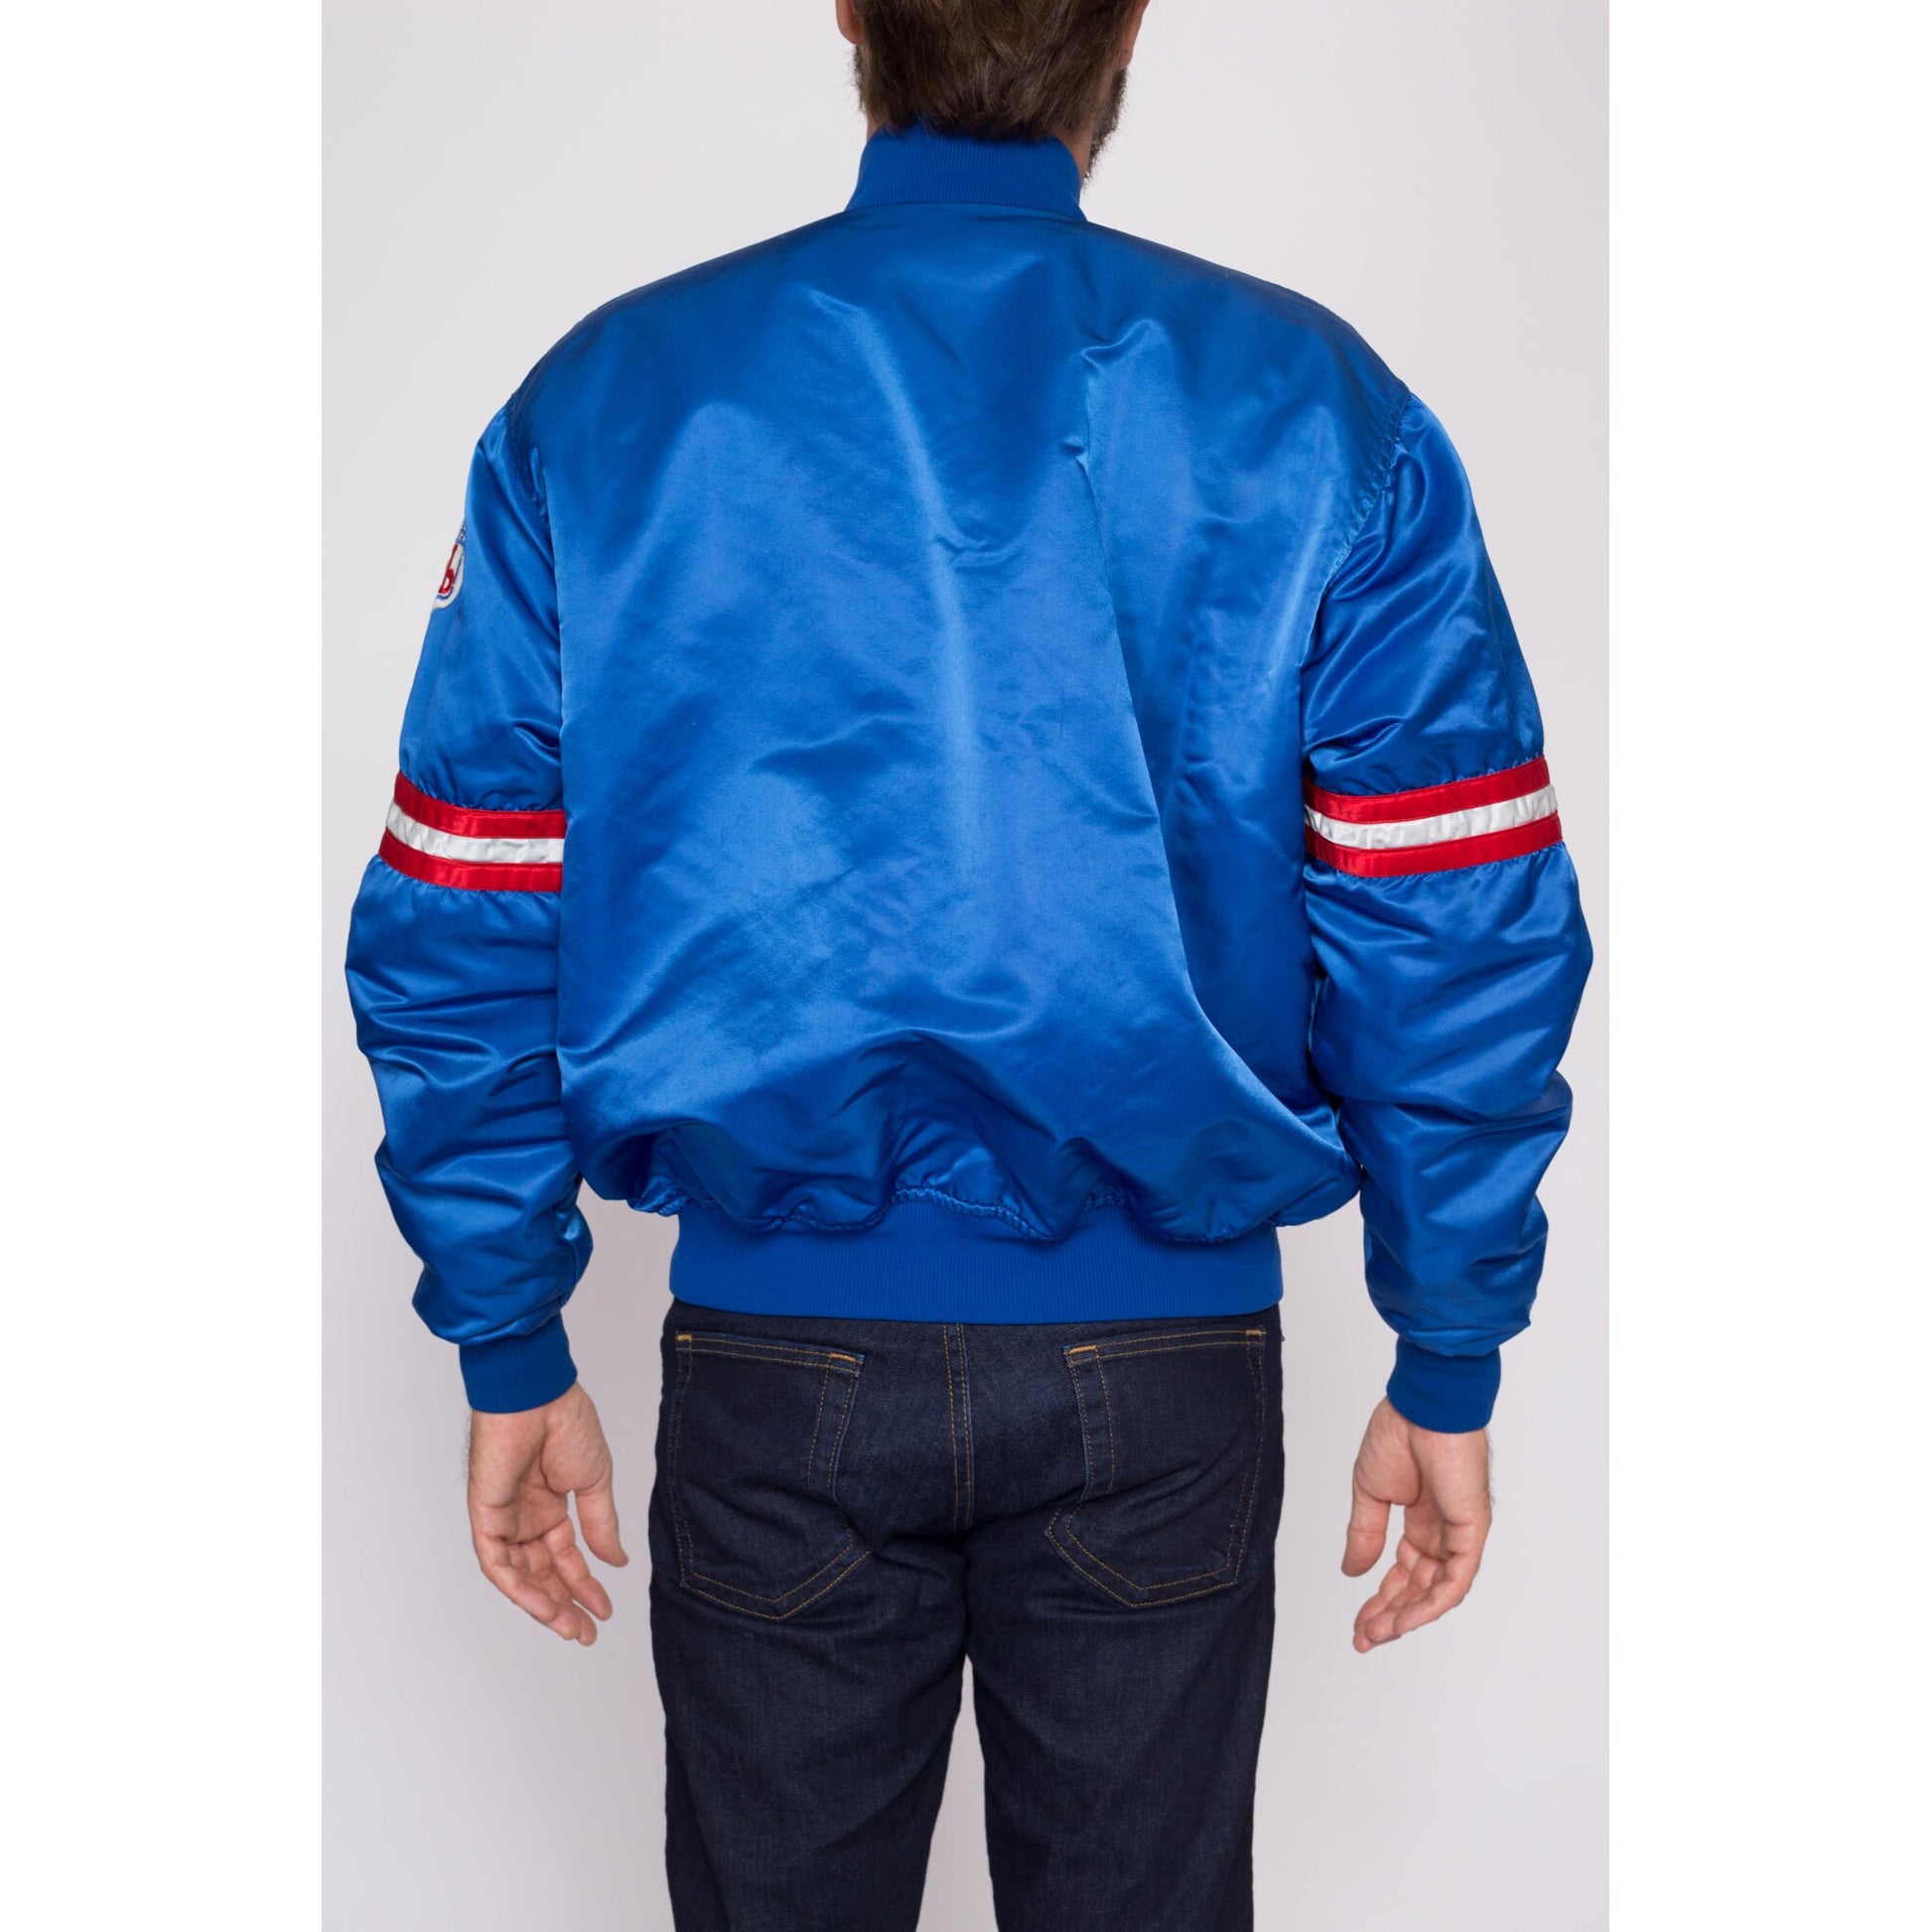 NFL Embroidered Flight/bomber Coats & Jackets for Men